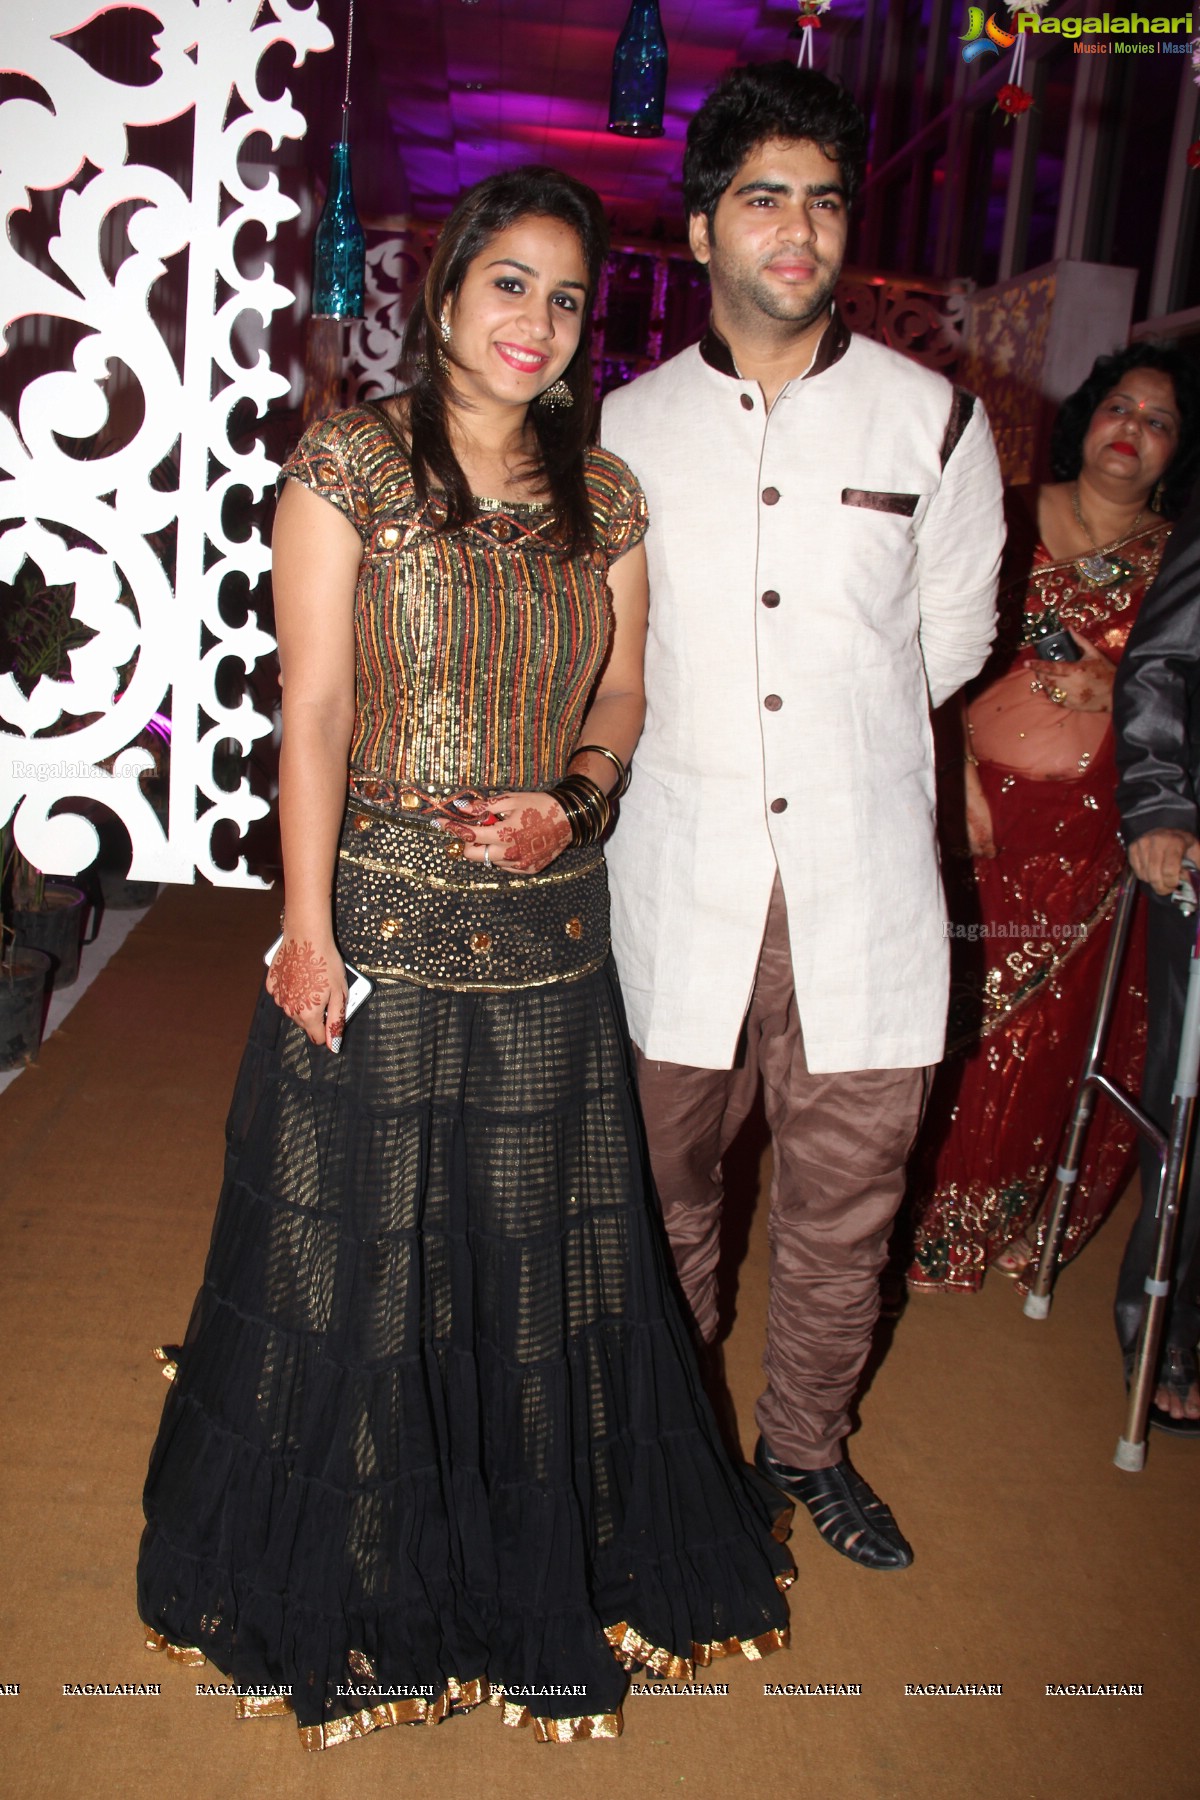 Wedding Ceremony of Sahil Gulati and Priyanka